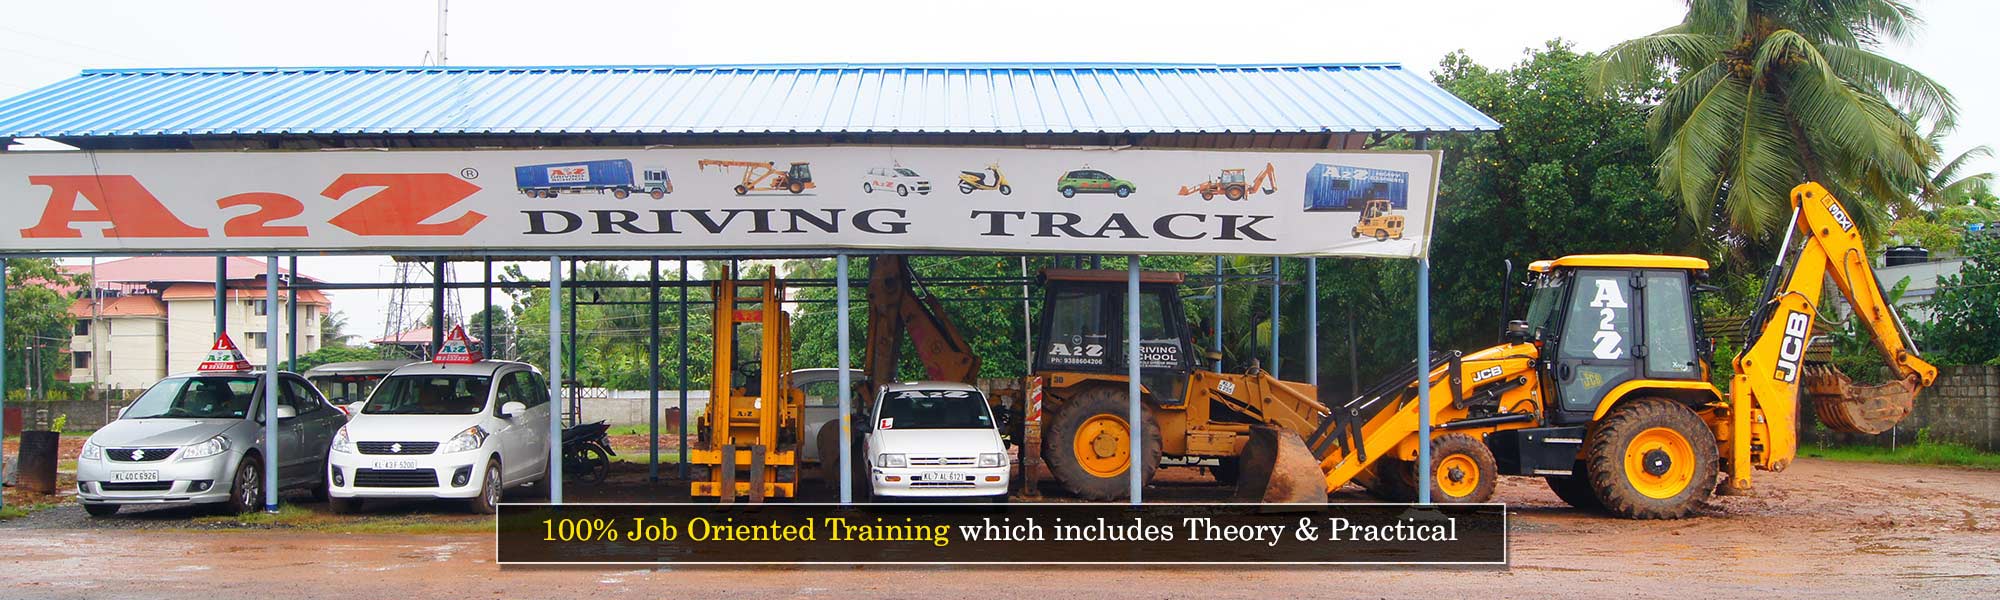 tower crane operation course in kerala | crane training centre in kerala